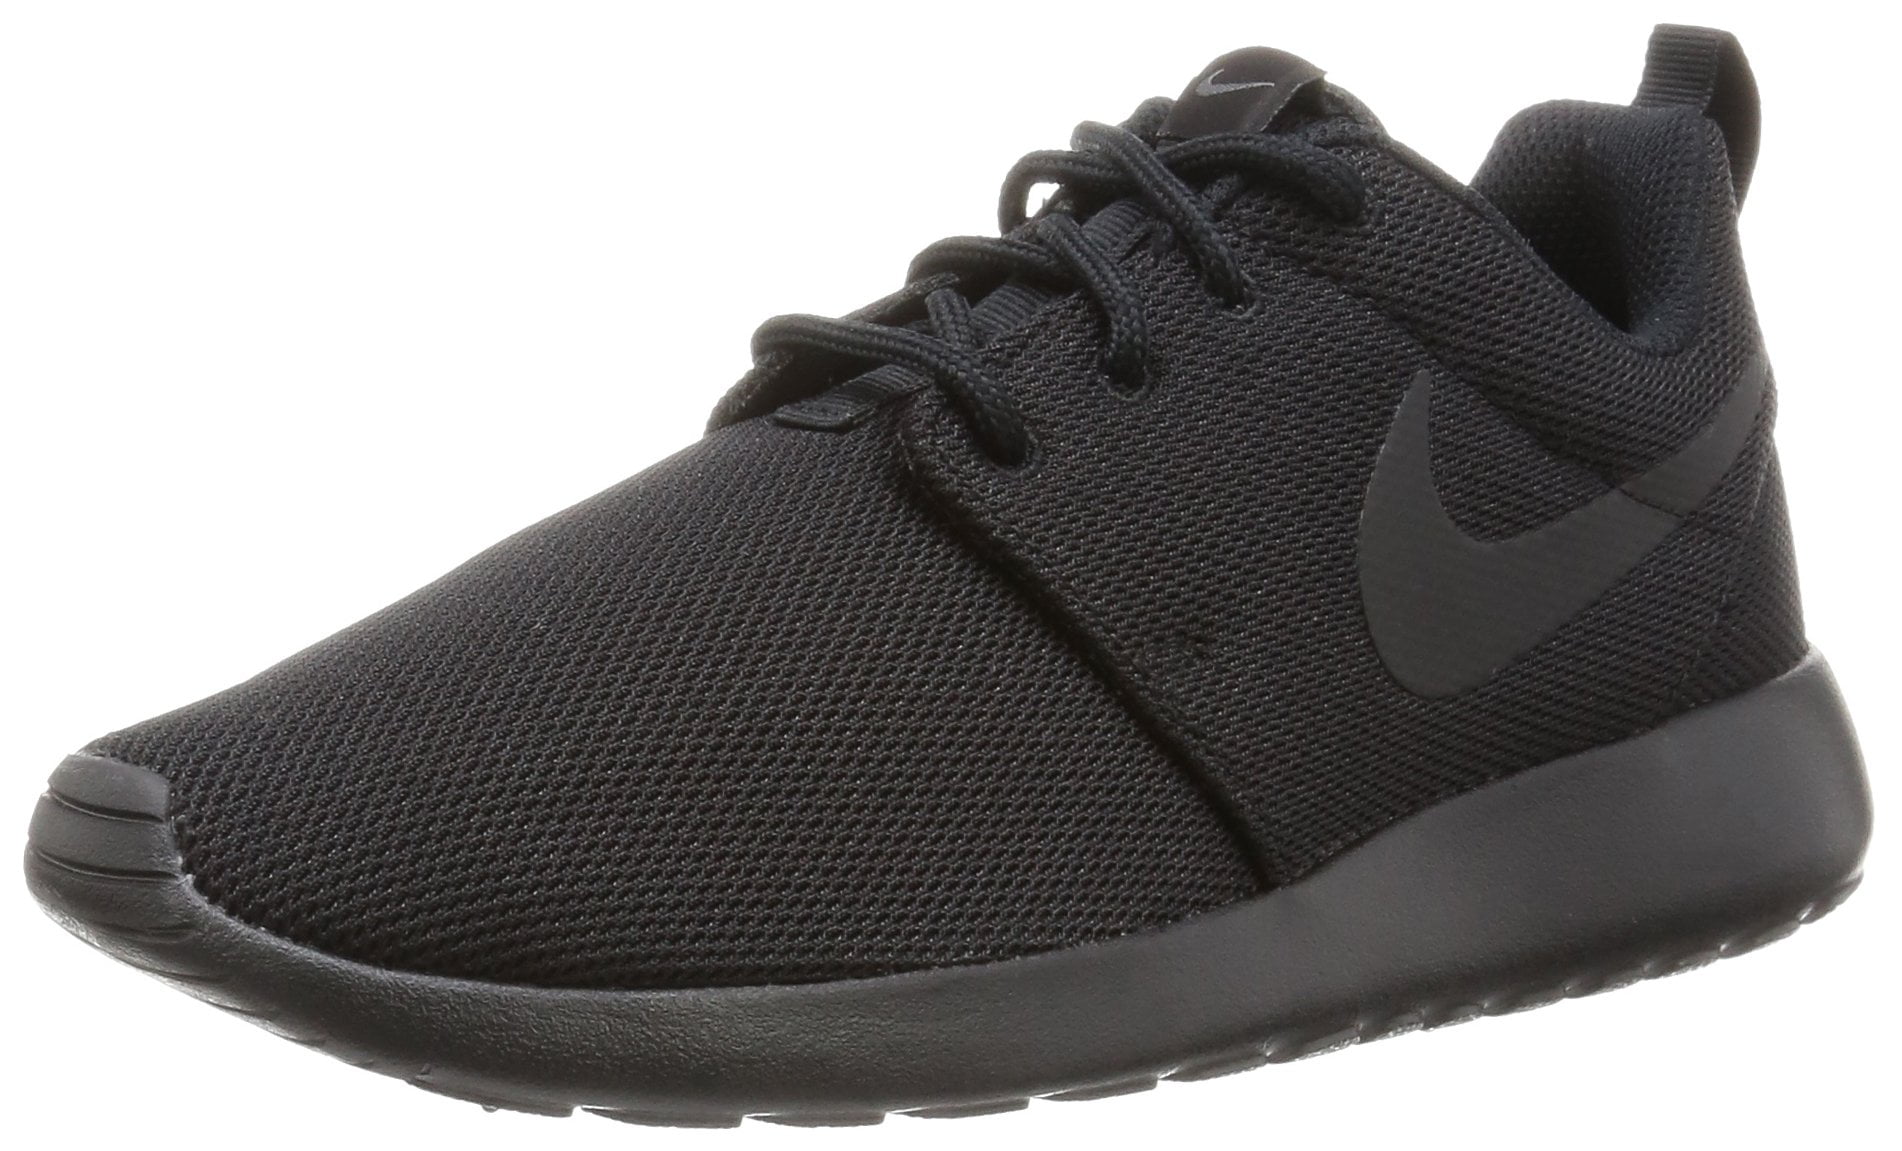 Nike - Nike 844994-001: Womens Roshe One running shoe Black/Dark Grey ...